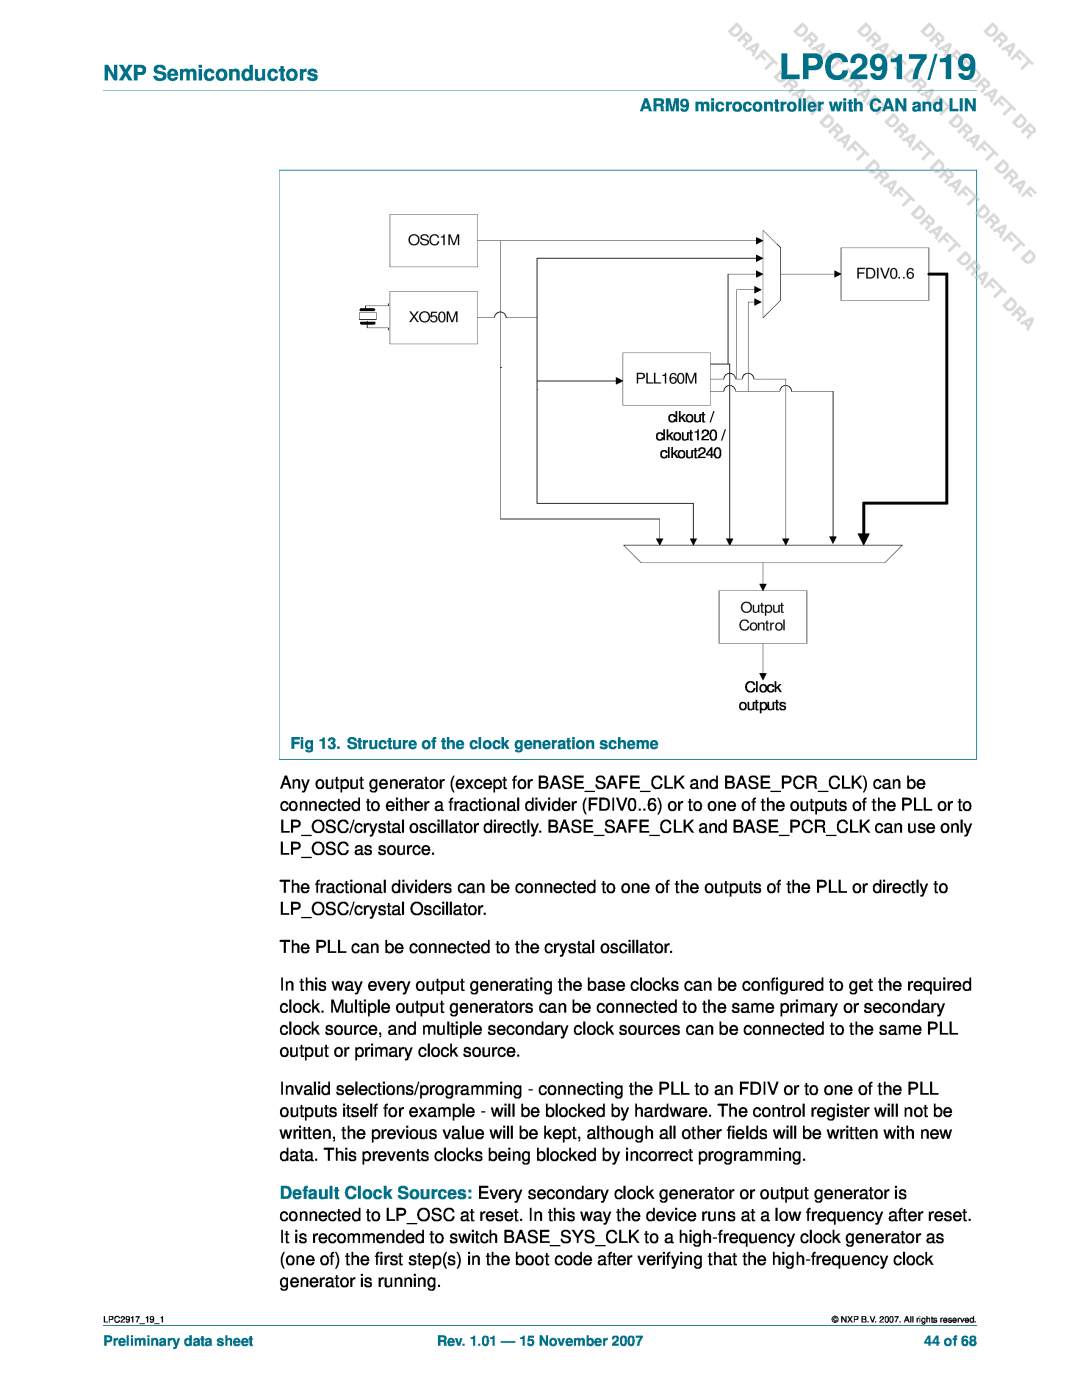 NXP Semiconductors LPC2919 user manual DLPC2917/19, Draft Draft Draf, LPOSC/crystal Oscillator 